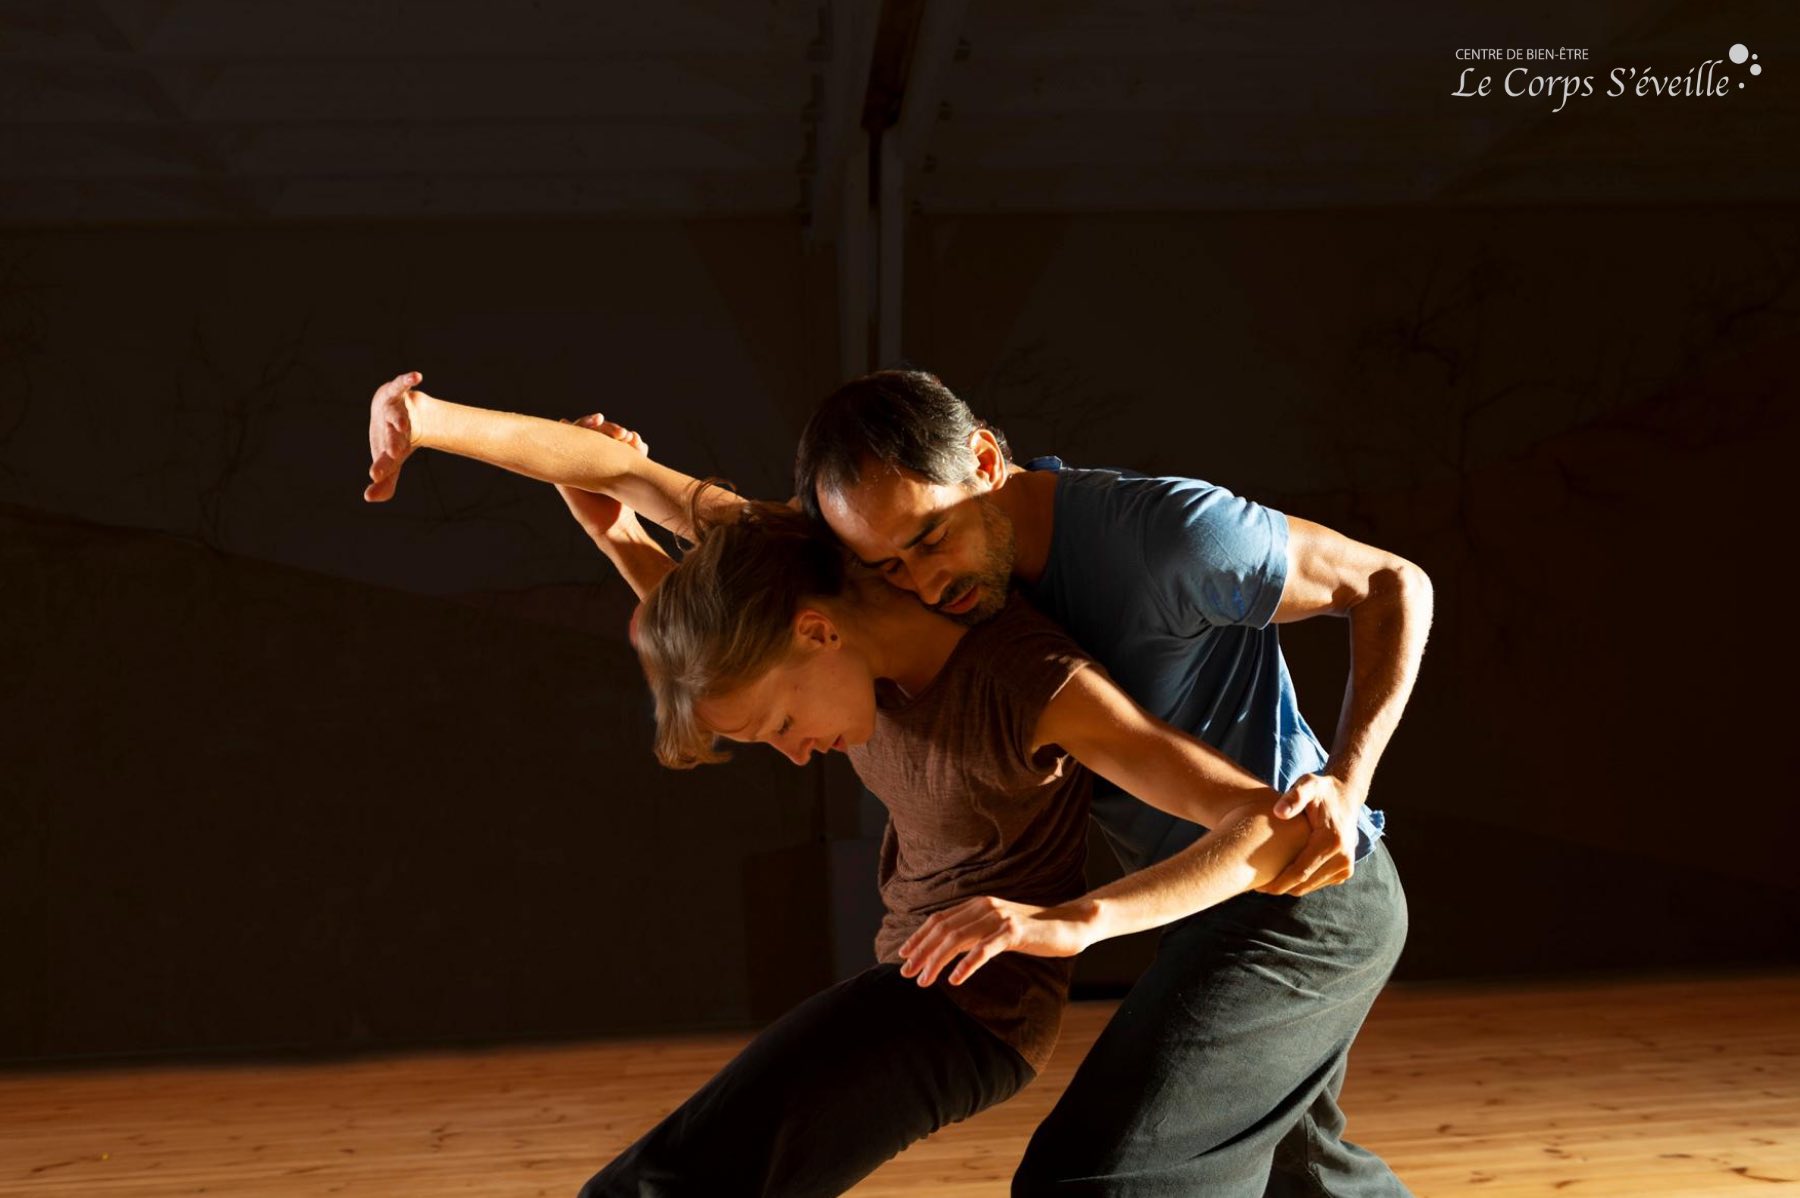 Julia Raynal et Rolando Rocha en danse contact improvisation. Photographe : Cyrille Cauvet.